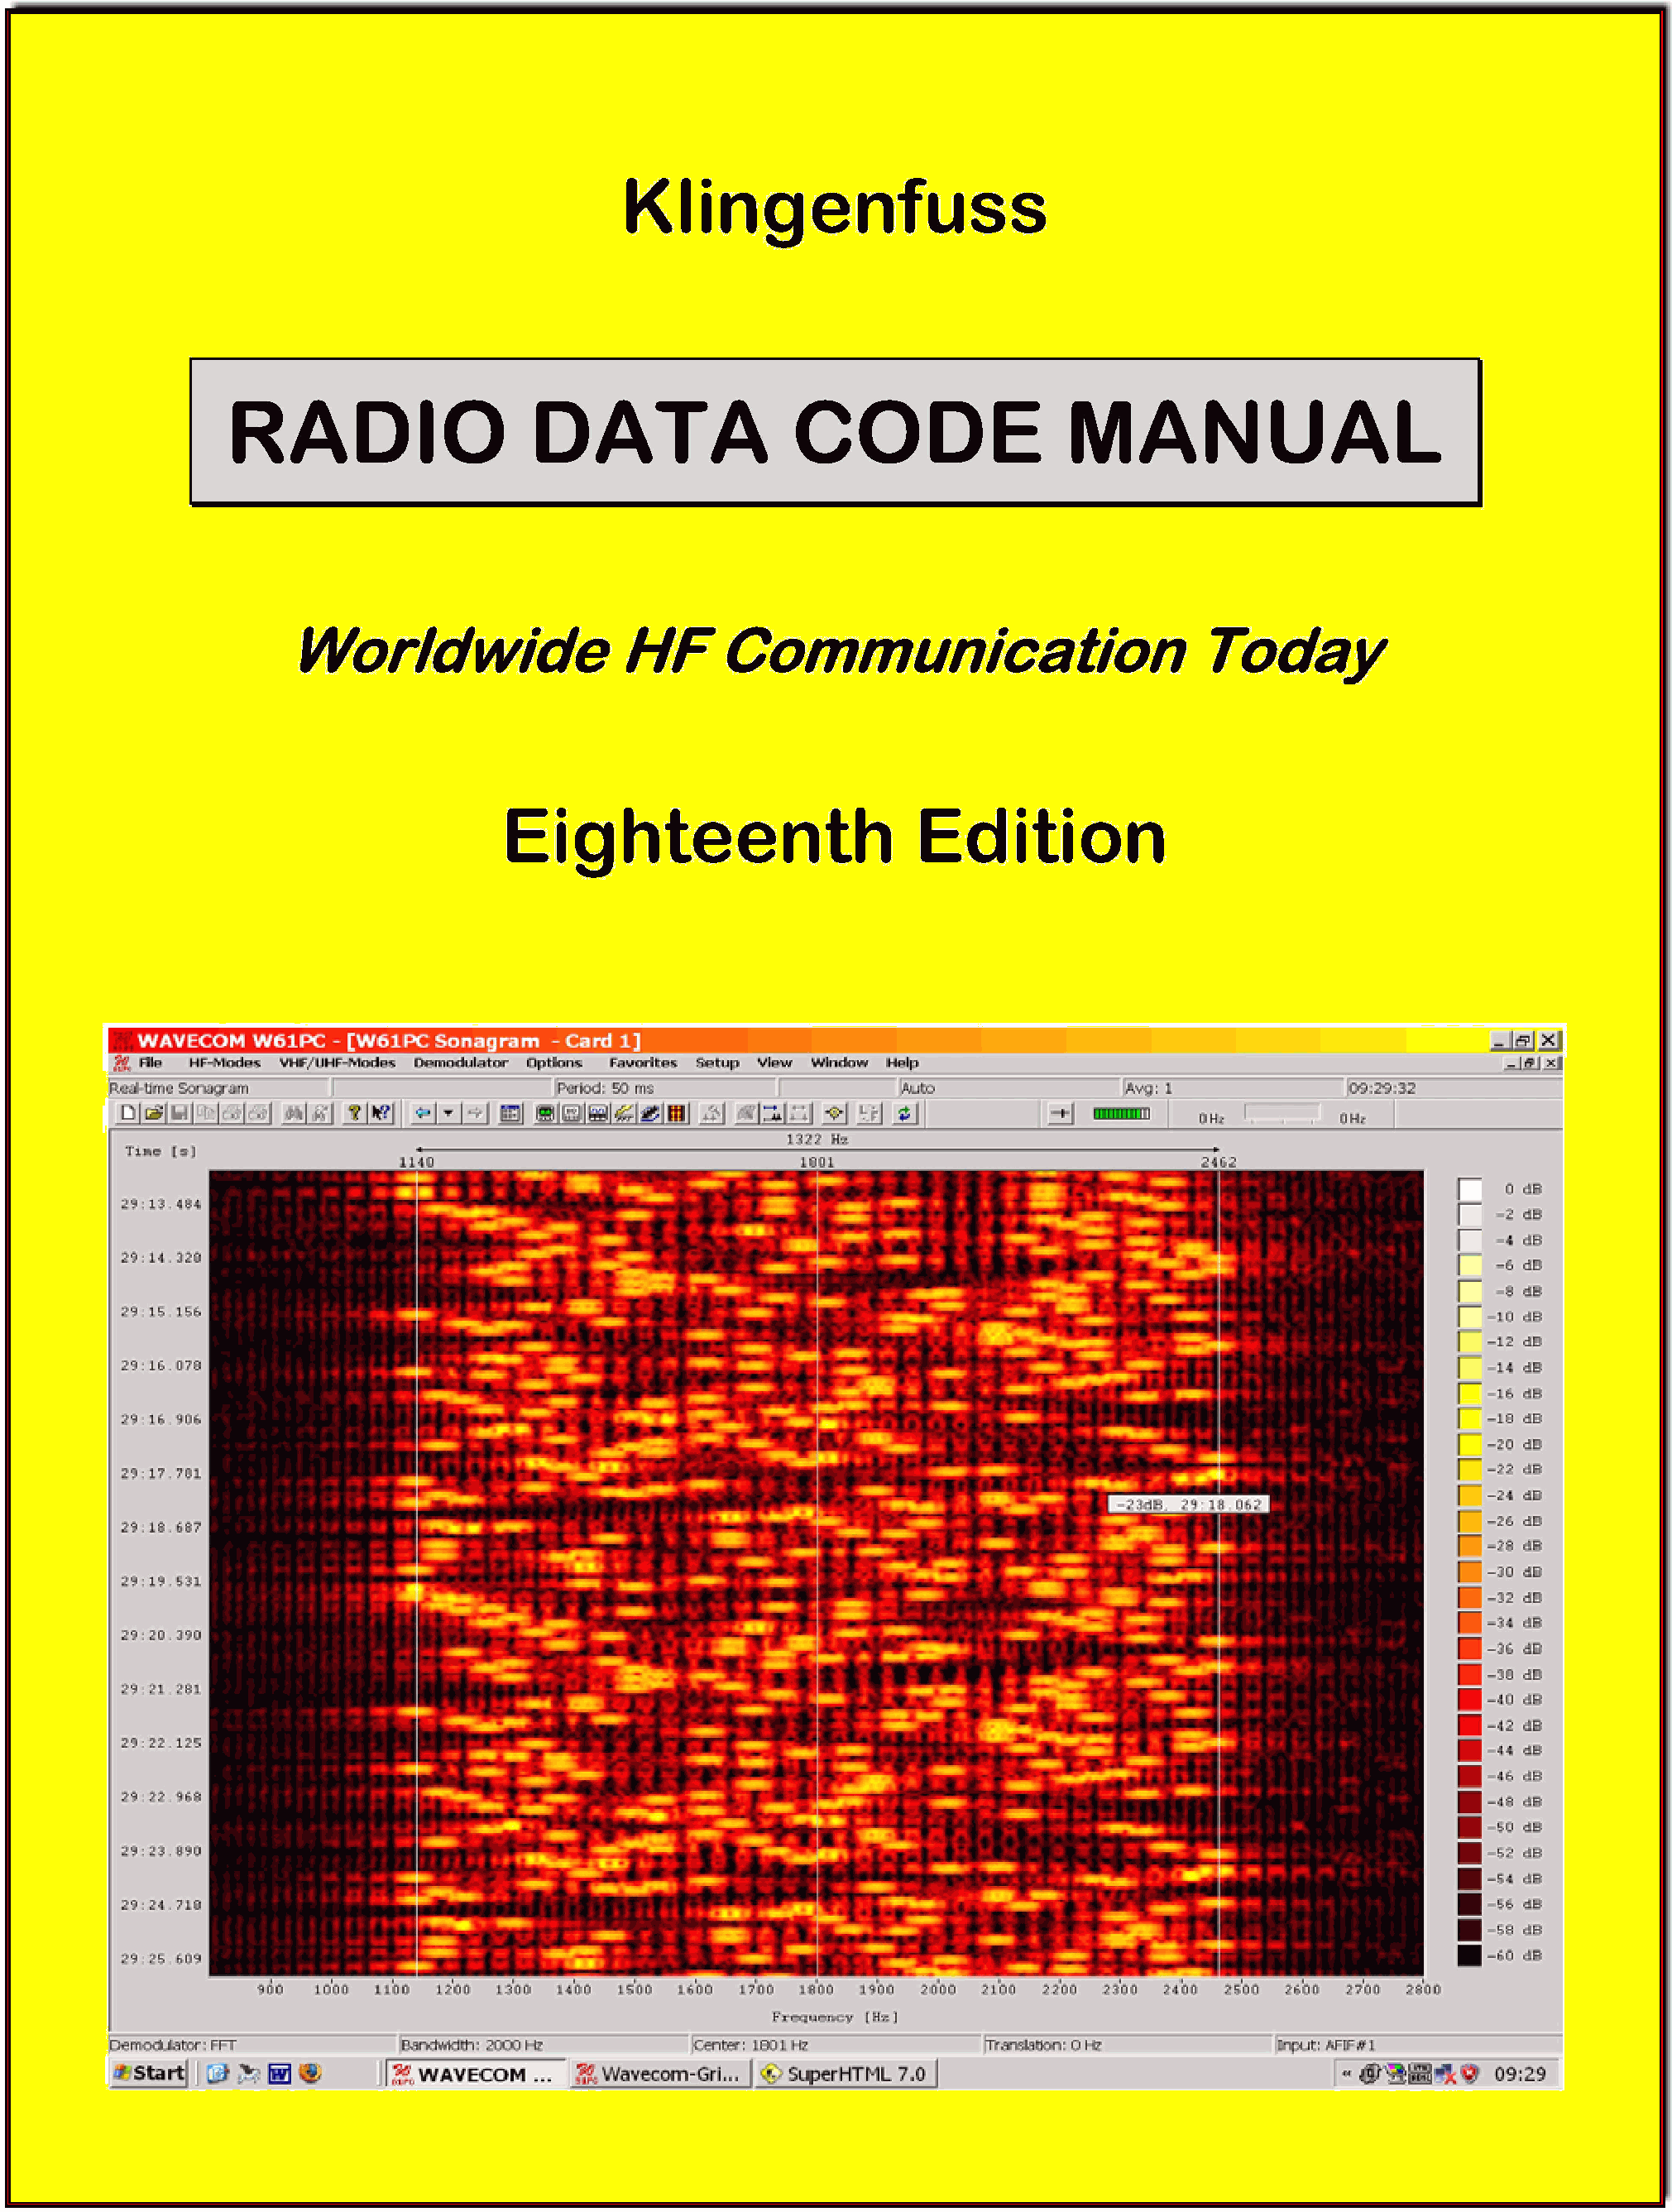 Radio Data Code Manual